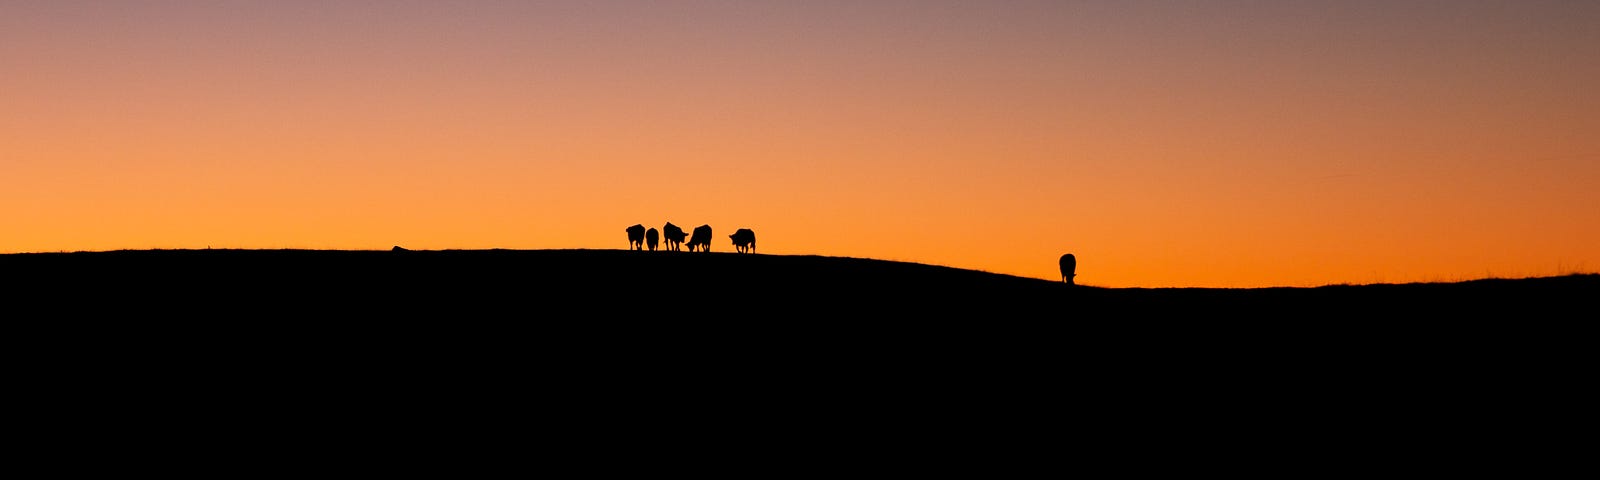 Cows in sunset. Orange sky.